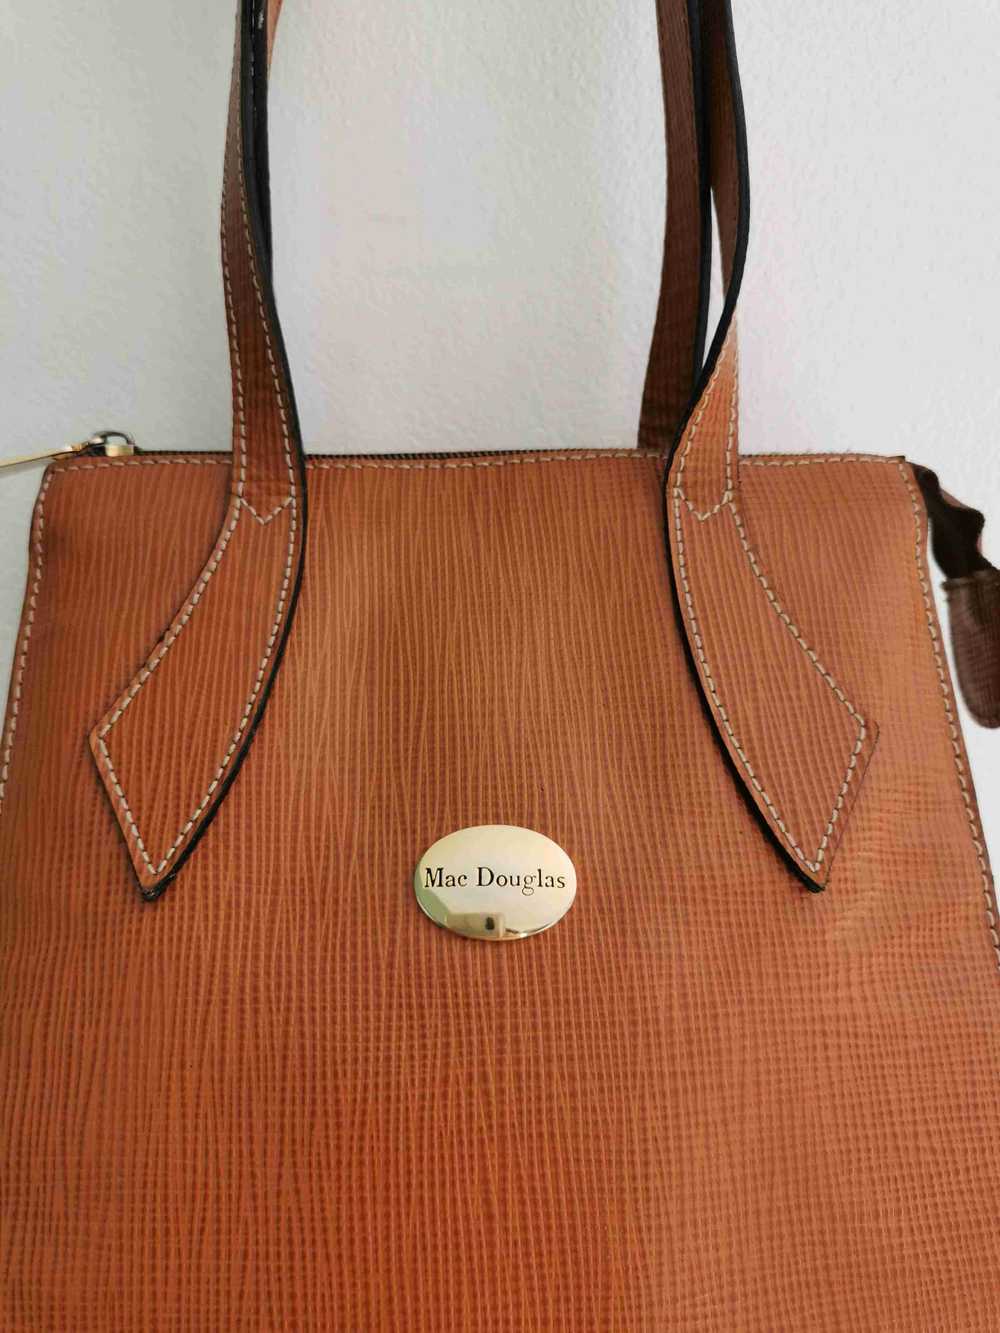 Leather handbag - Mac Douglas handbag in tan leat… - image 3